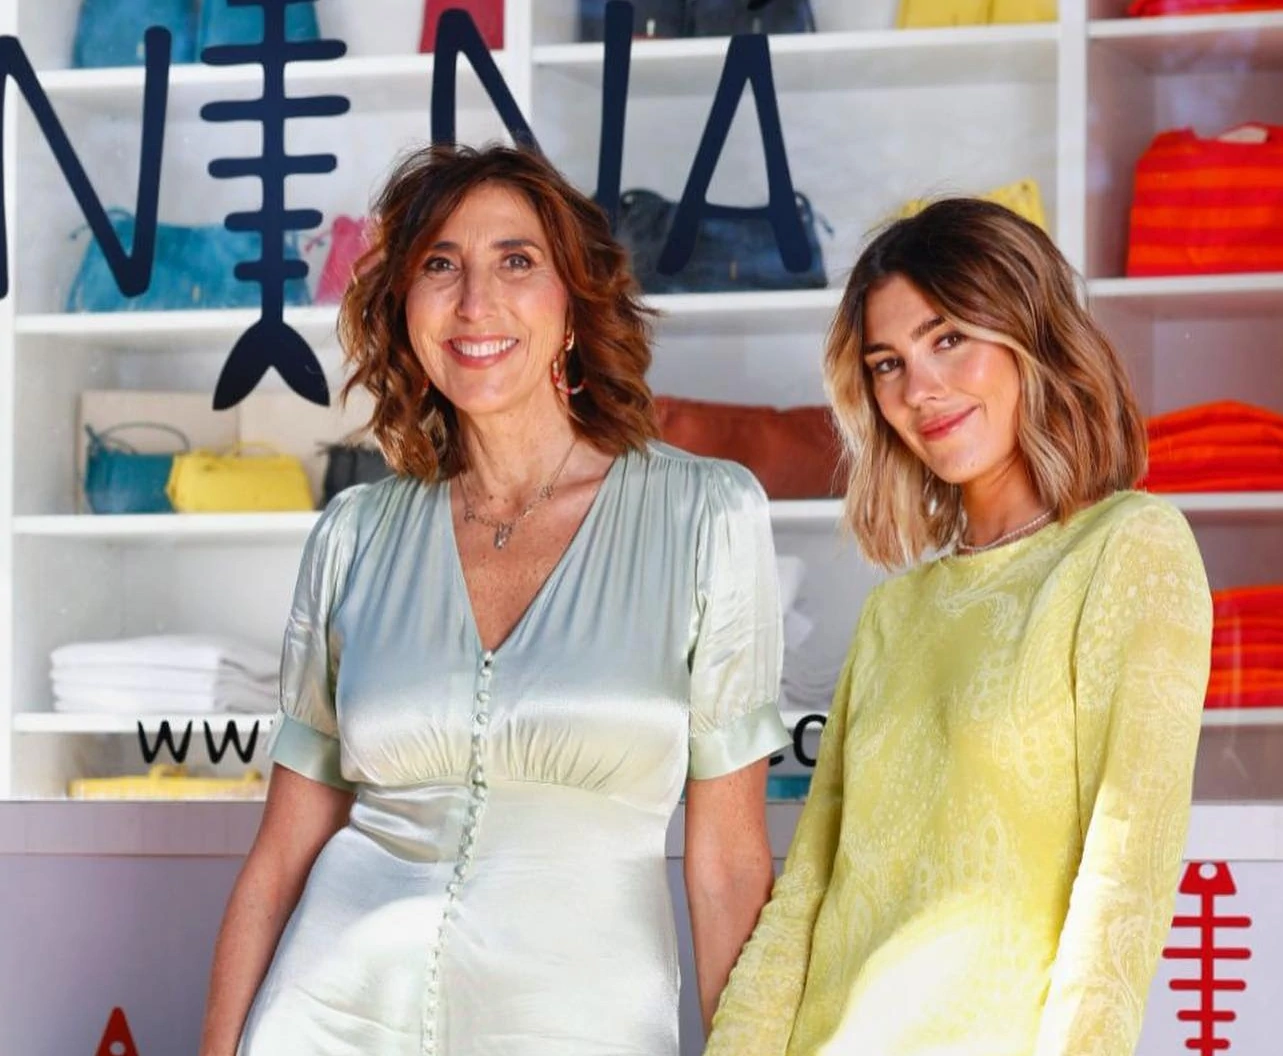 Paz Padilla y Anna Ferrer inauguran su tienda ambulante